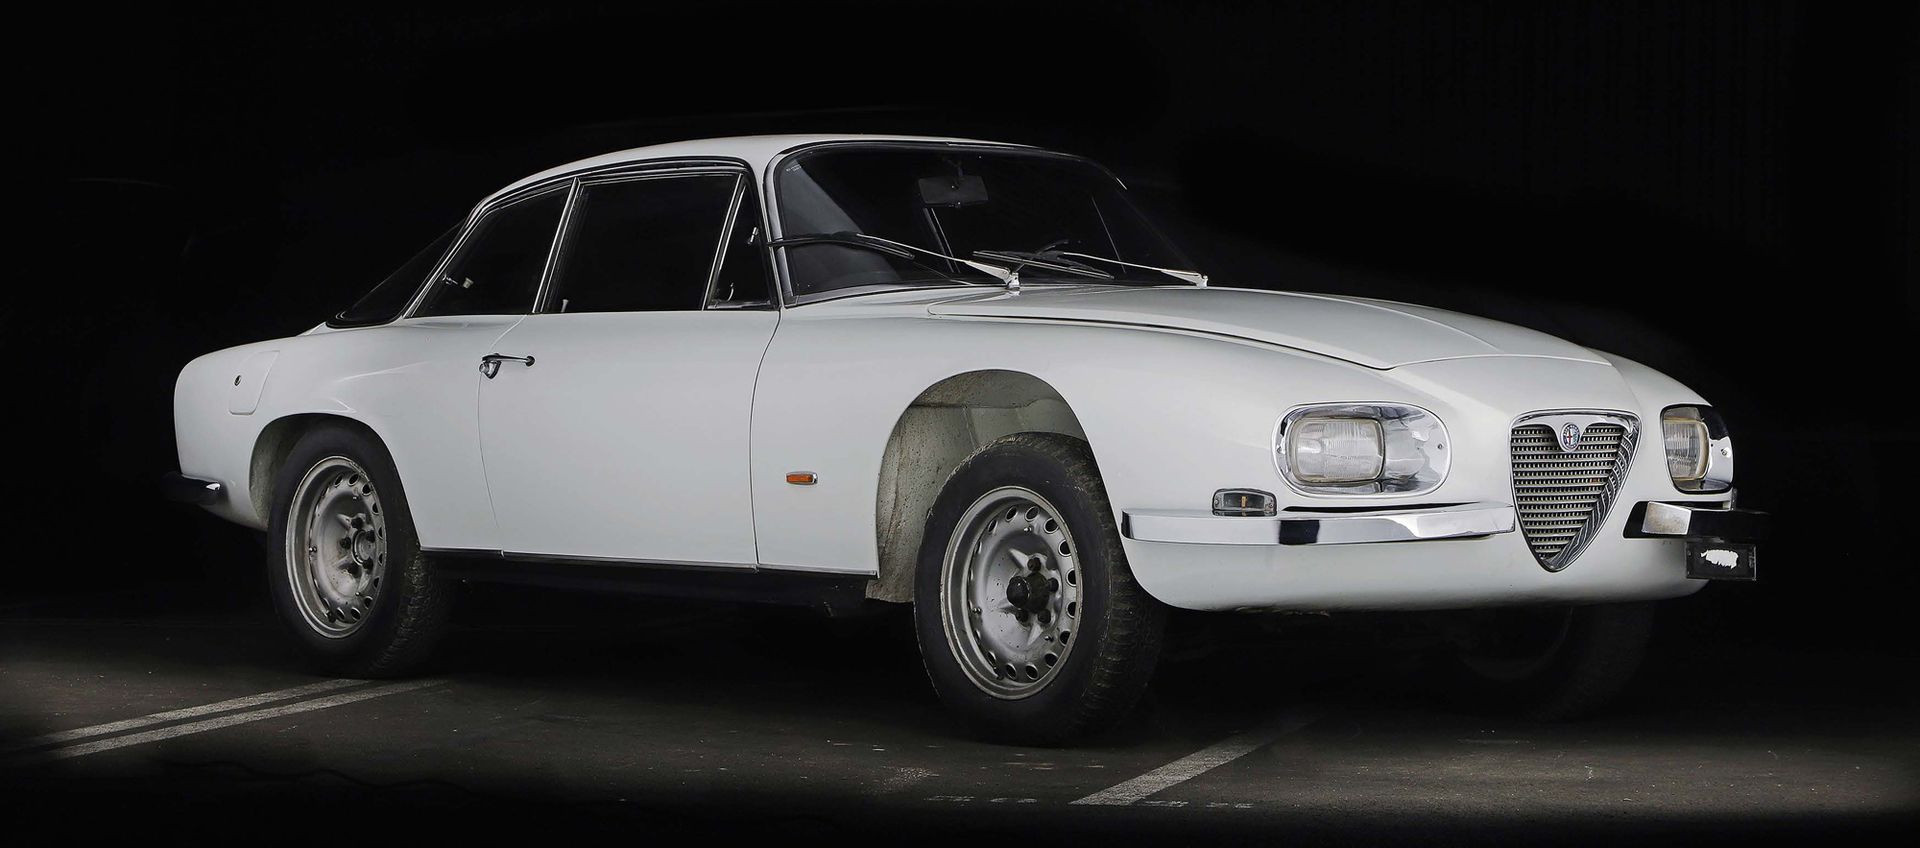 1966 ALFA ROMEO 2600 SZ 
发动机型号AR00601 

FFVE证书



生产了105个单位

极为罕见的模型

一个伟大的汽车制造商&hellip;